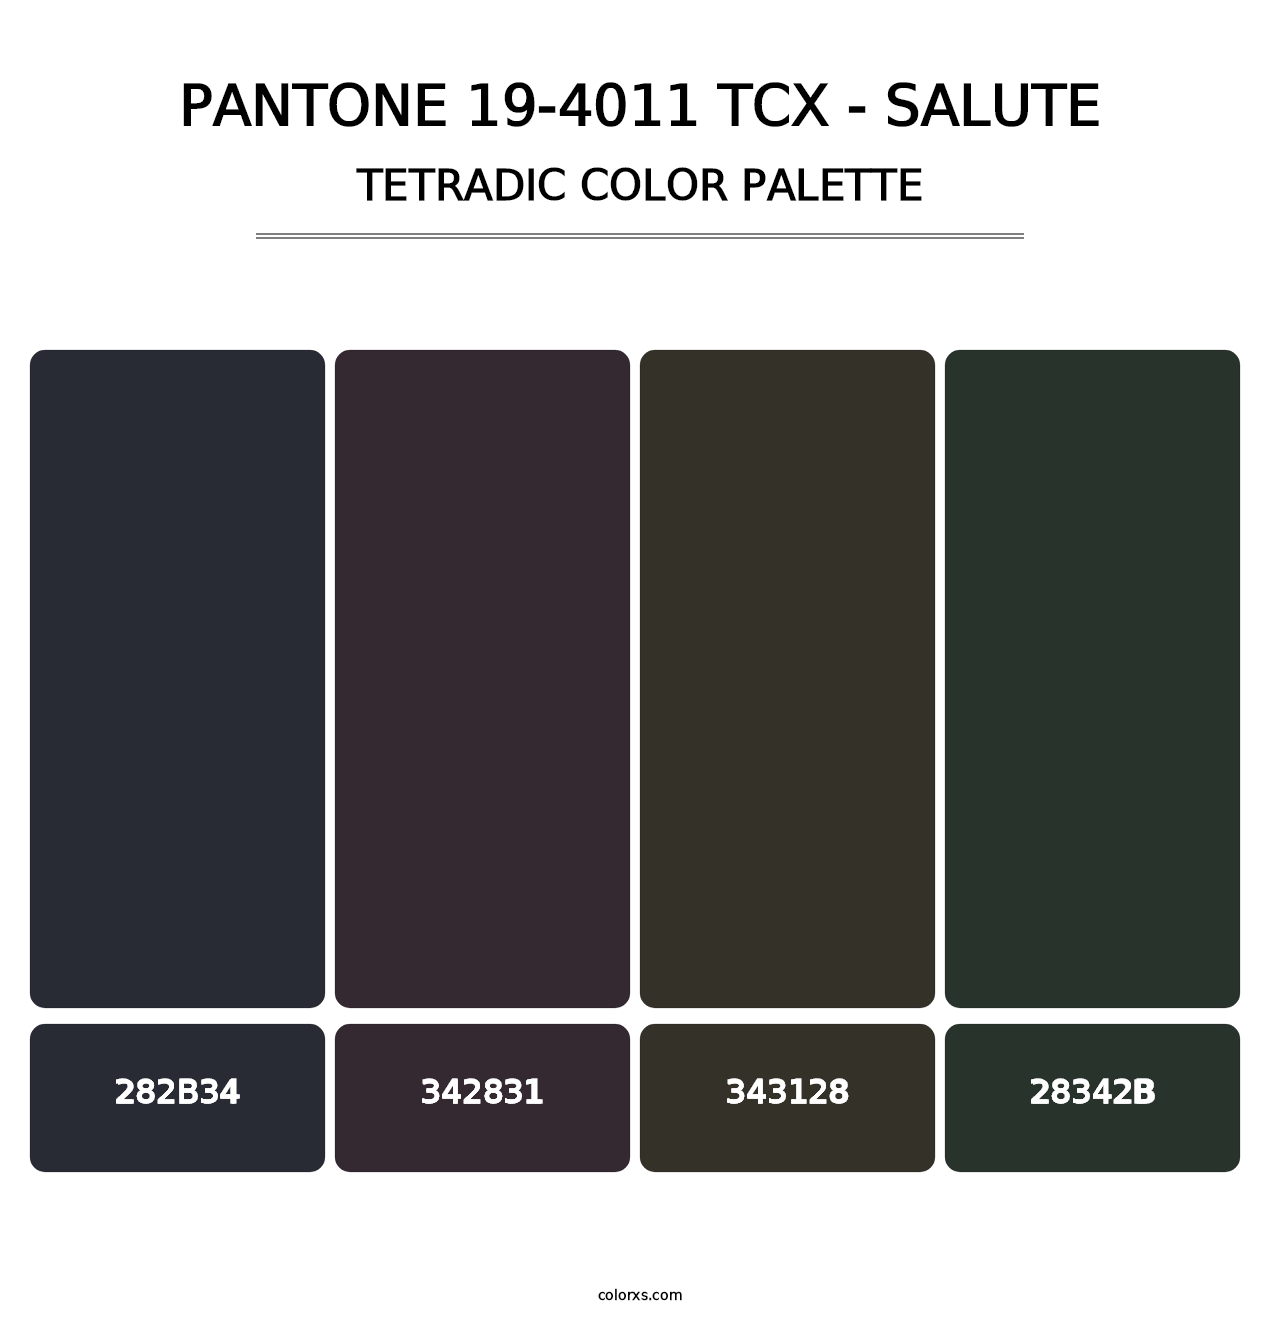 PANTONE 19-4011 TCX - Salute - Tetradic Color Palette